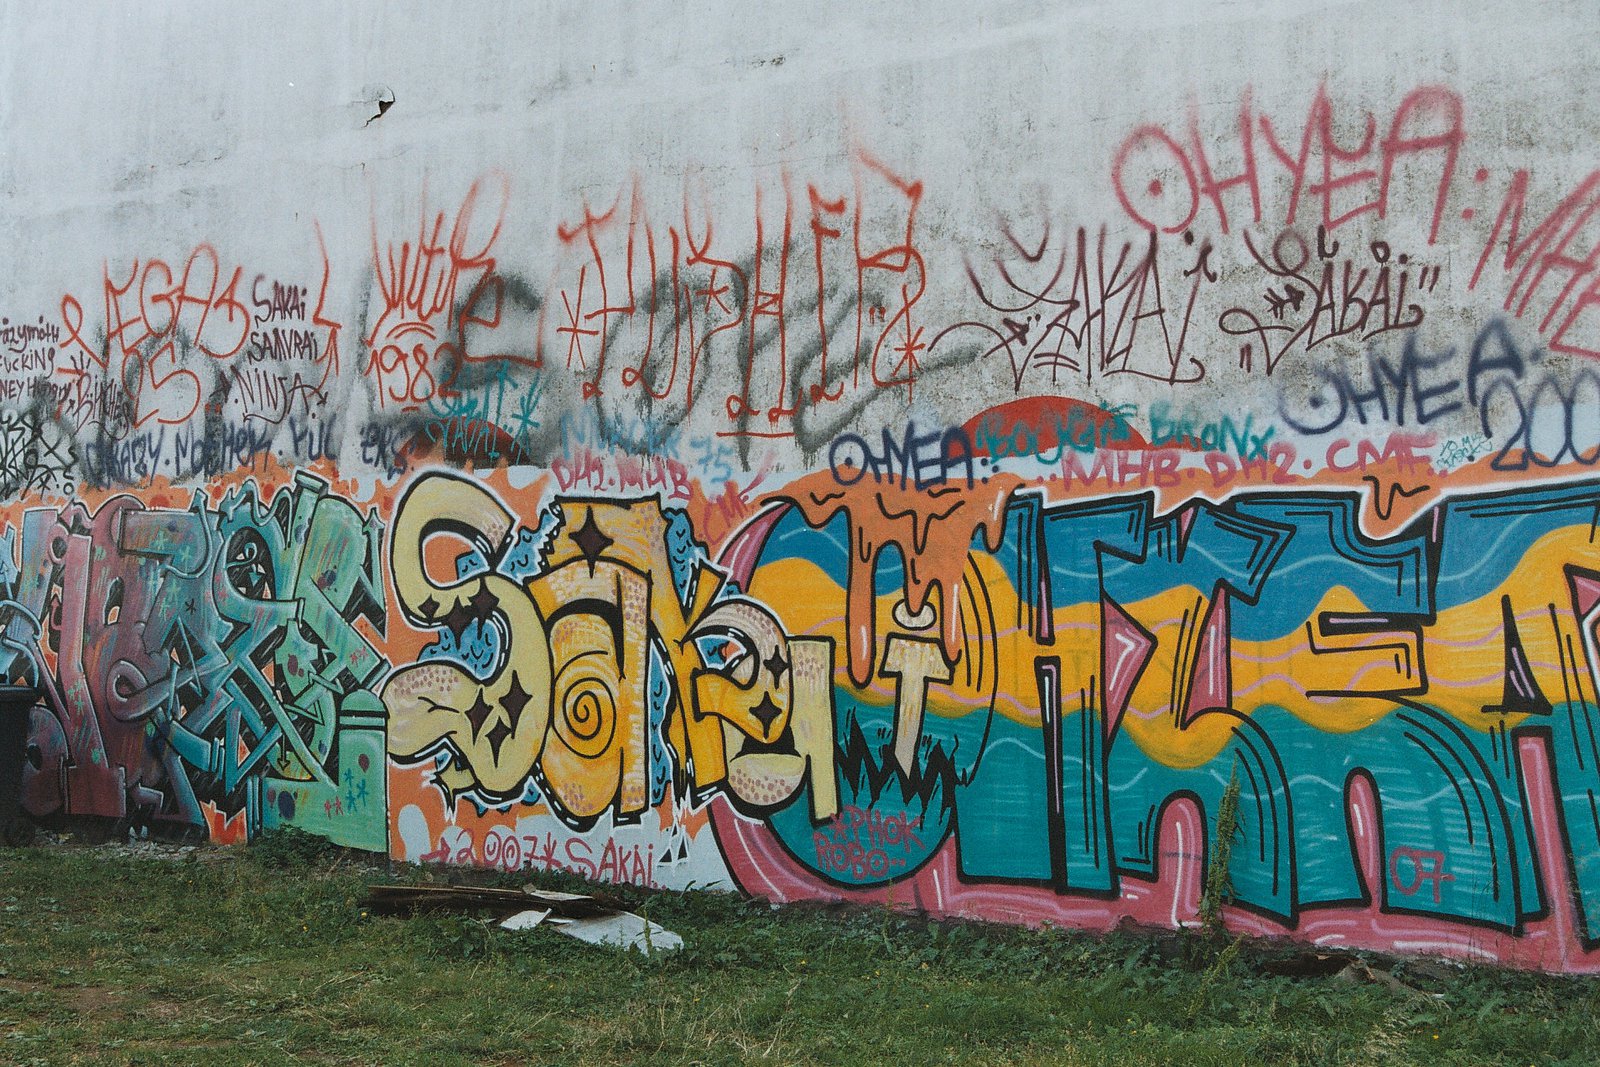 Some grafitti